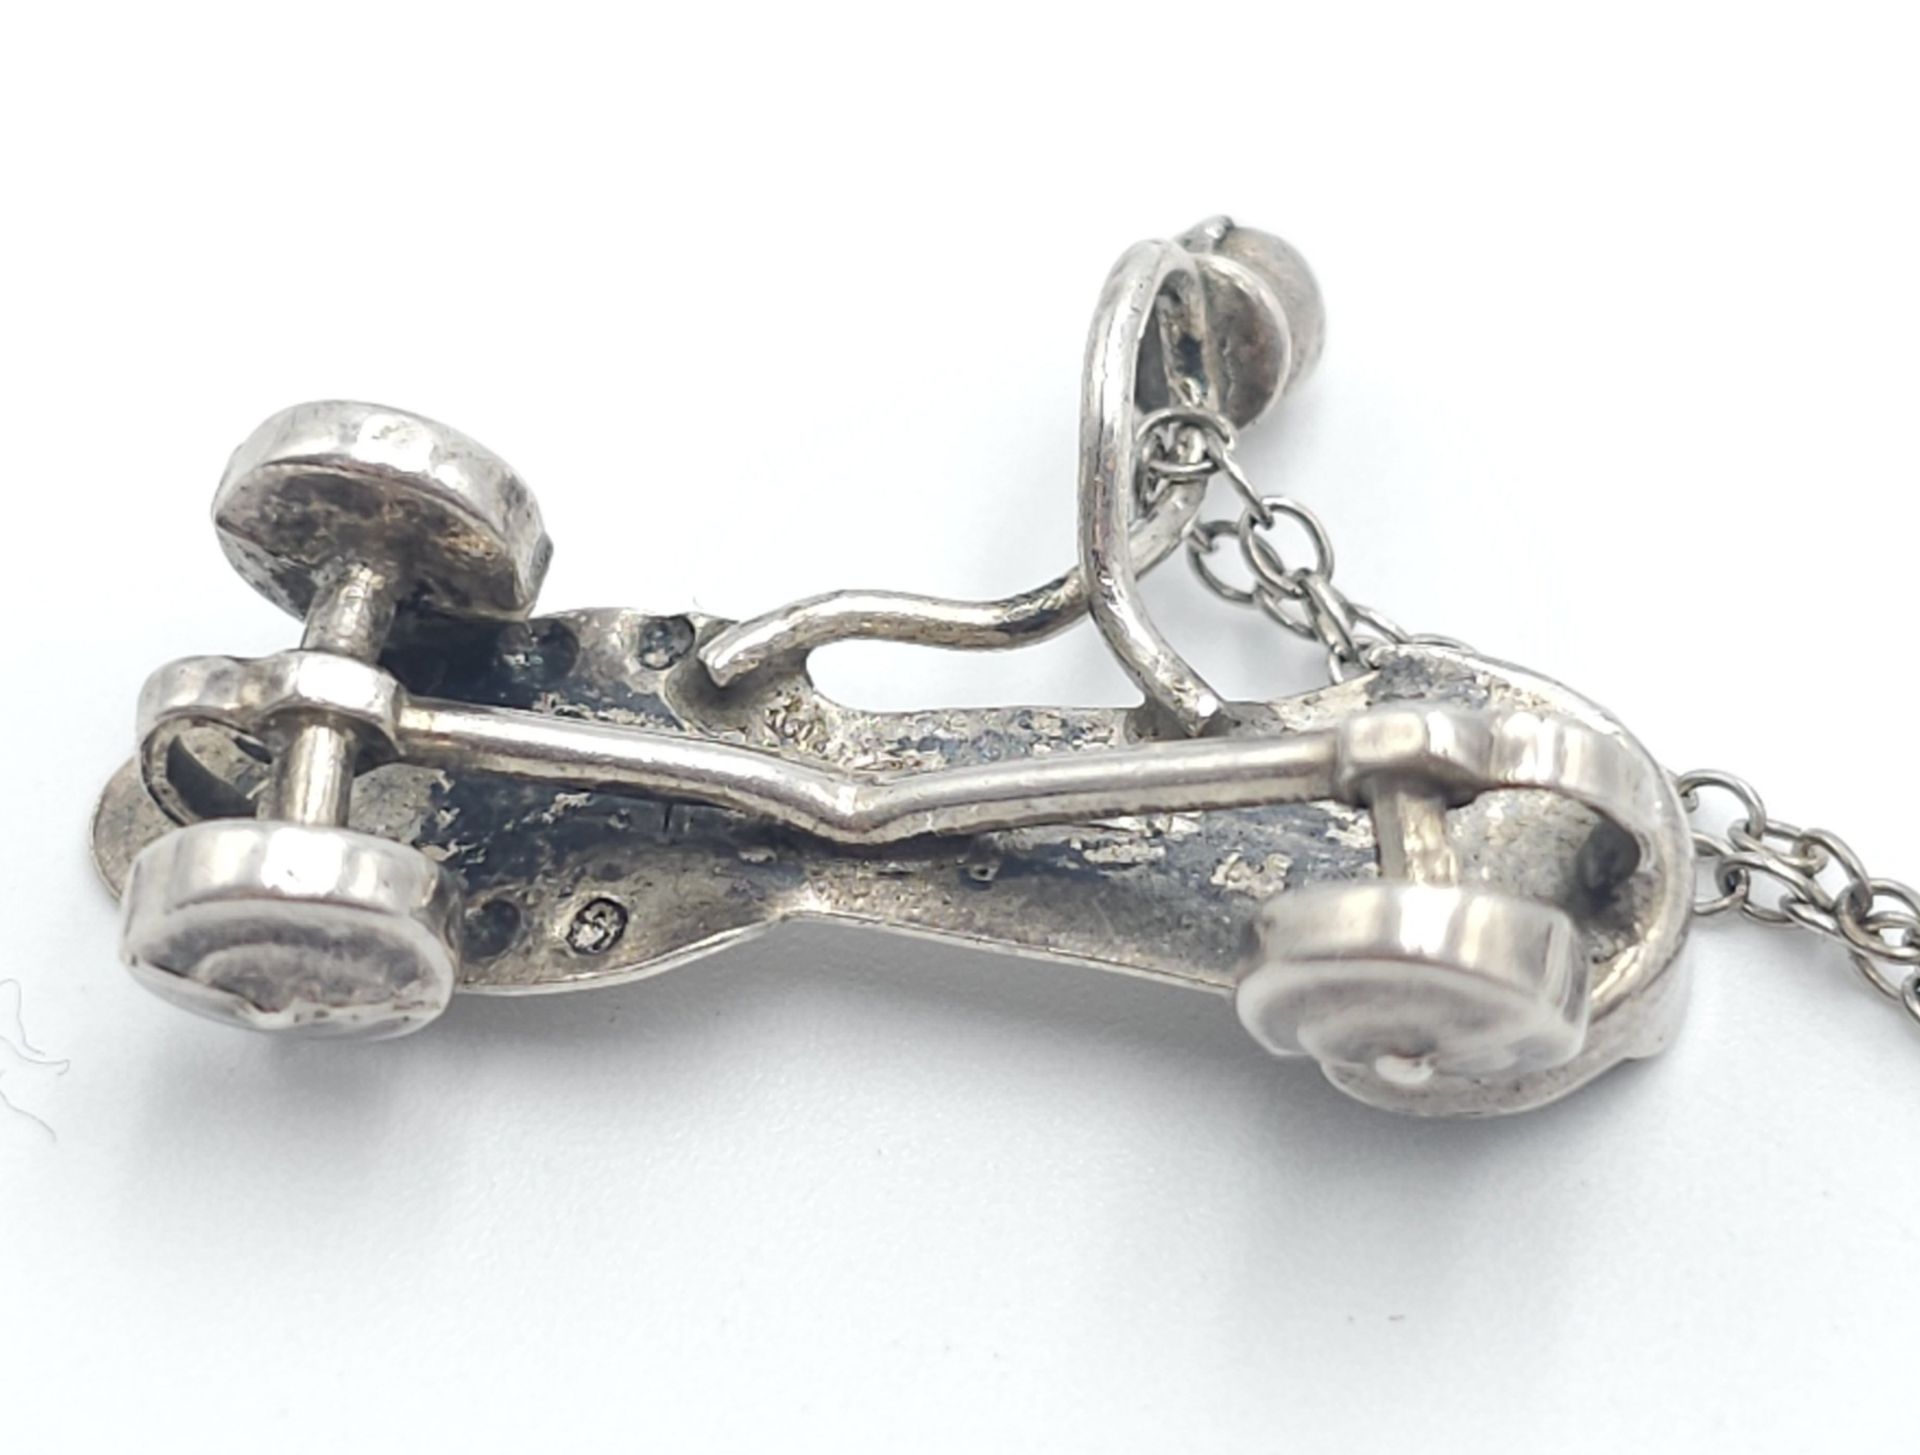 A Vintage Silver Roller Skate Pendant Necklace. 42cm Length. Silver Pendant has a Registered Mark on - Image 3 of 9